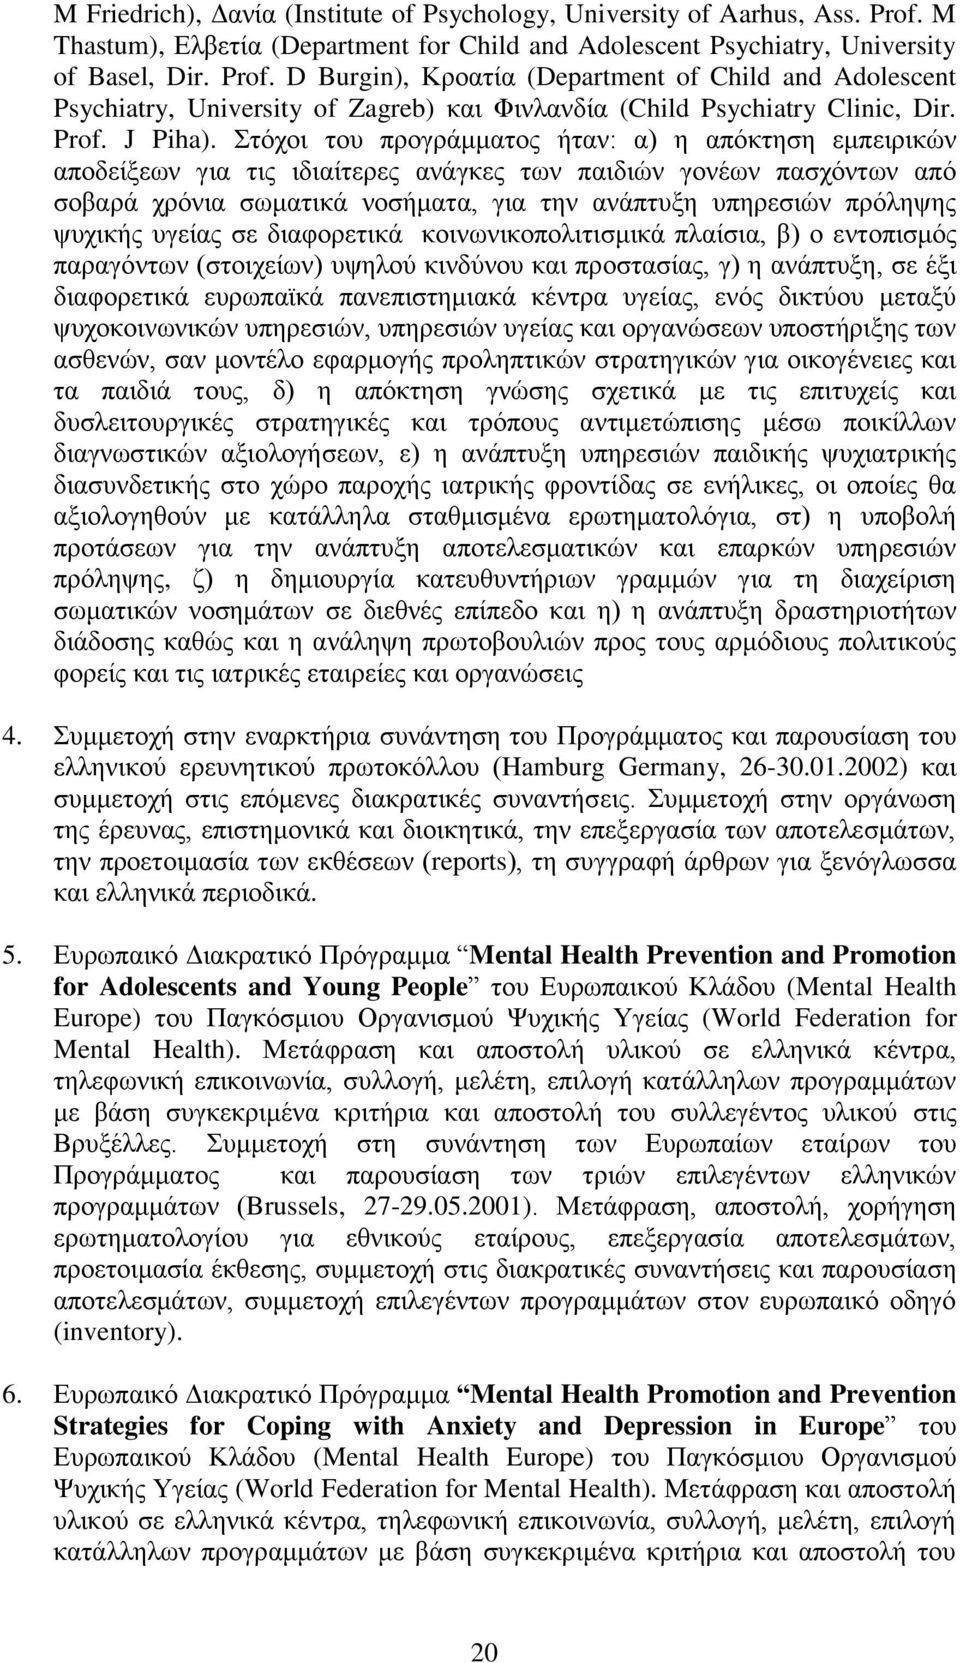 D Burgin), Κροατία (Department of Child and Adolescent Psychiatry, University of Zagreb) και Φινλανδία (Child Psychiatry Clinic, Dir. Prof. J Piha).